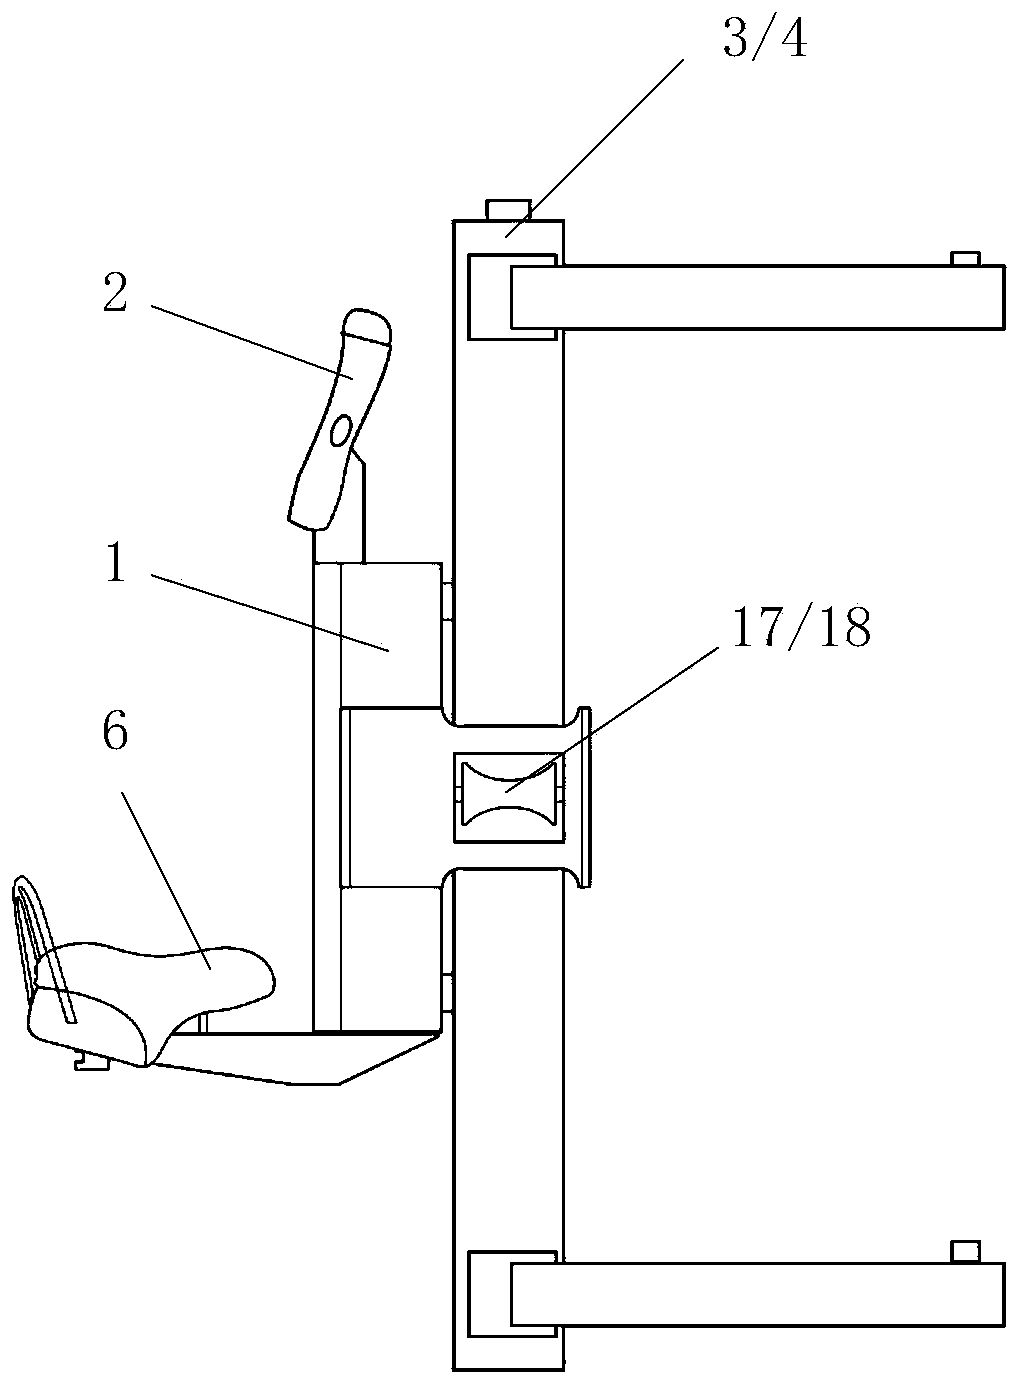 Pole holding mechanism for manned pole climbing operation platform